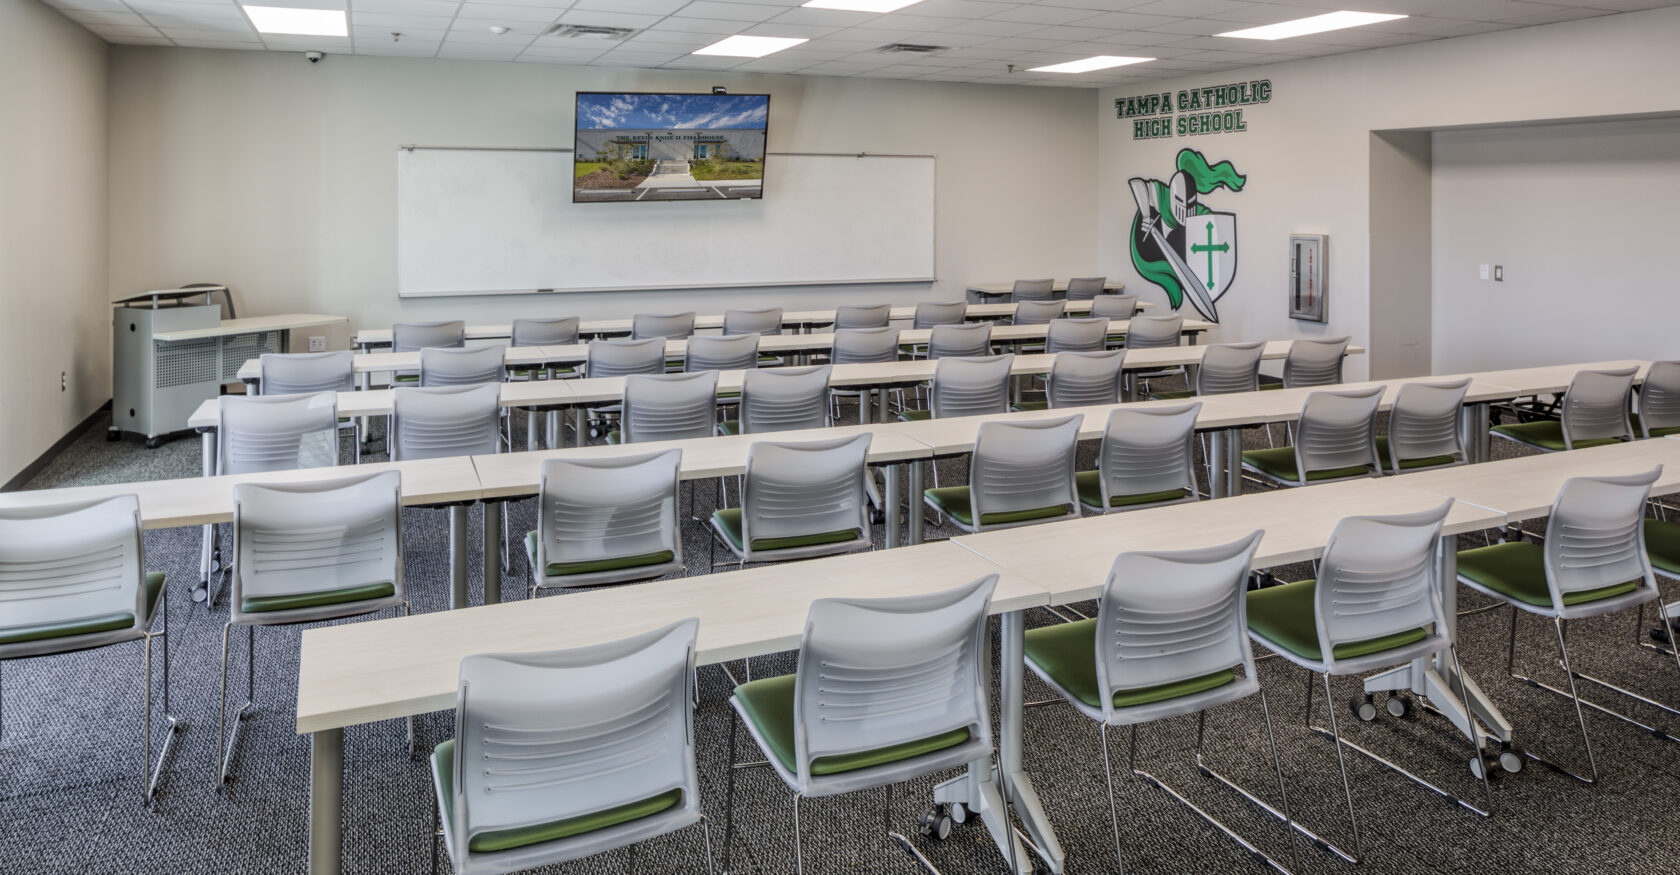 Interior shot of Tampa Catholic classroom